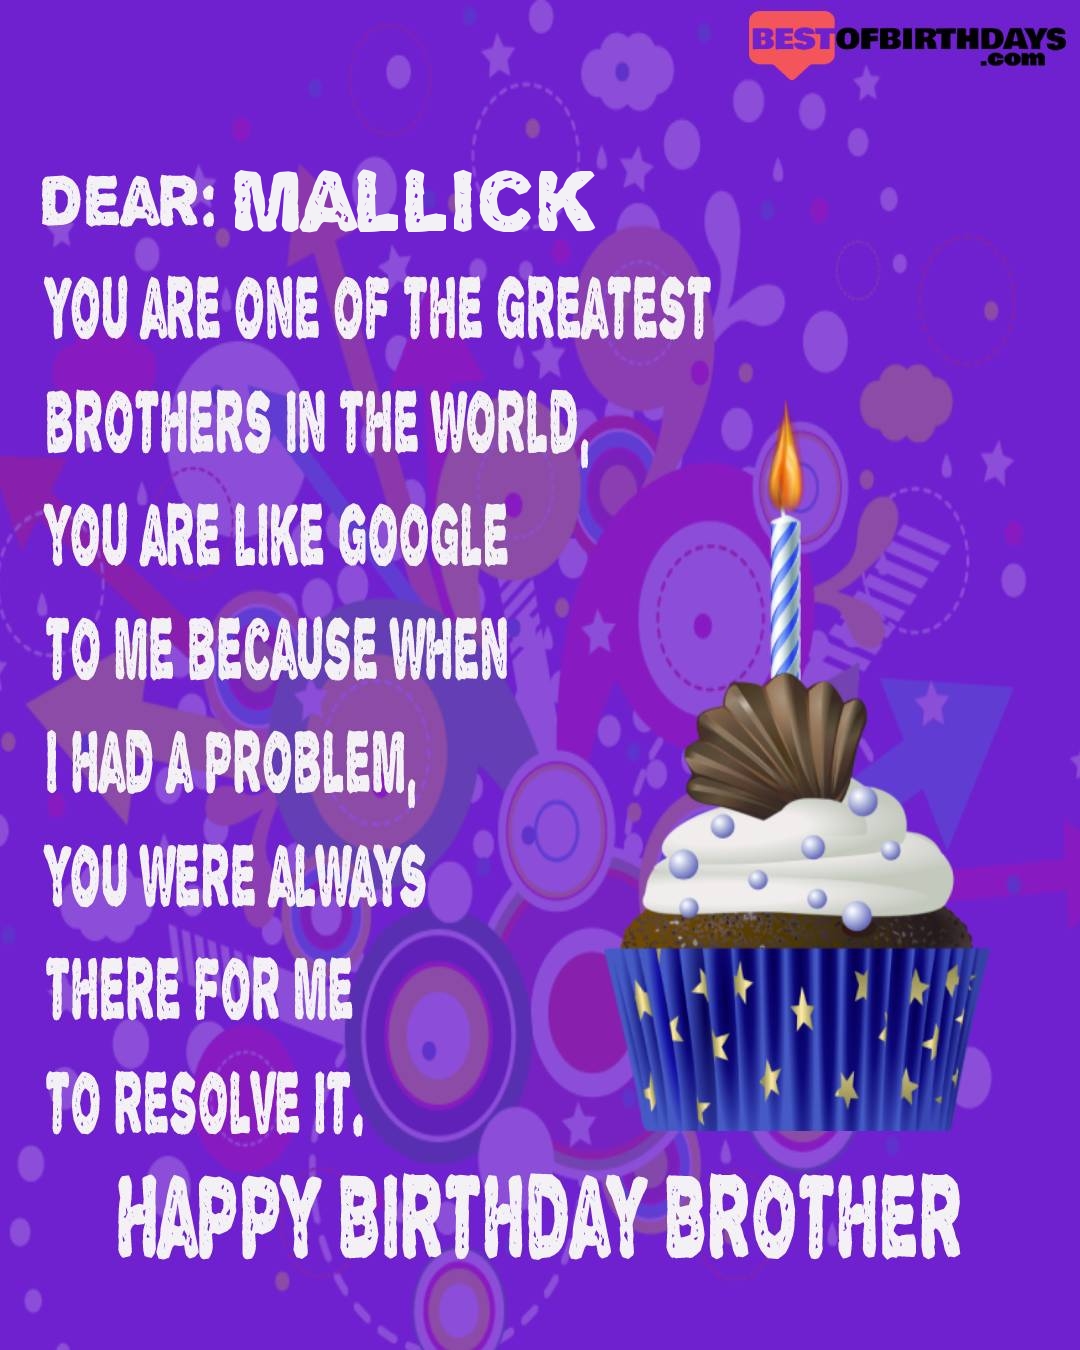 Happy birthday mallick bhai brother bro